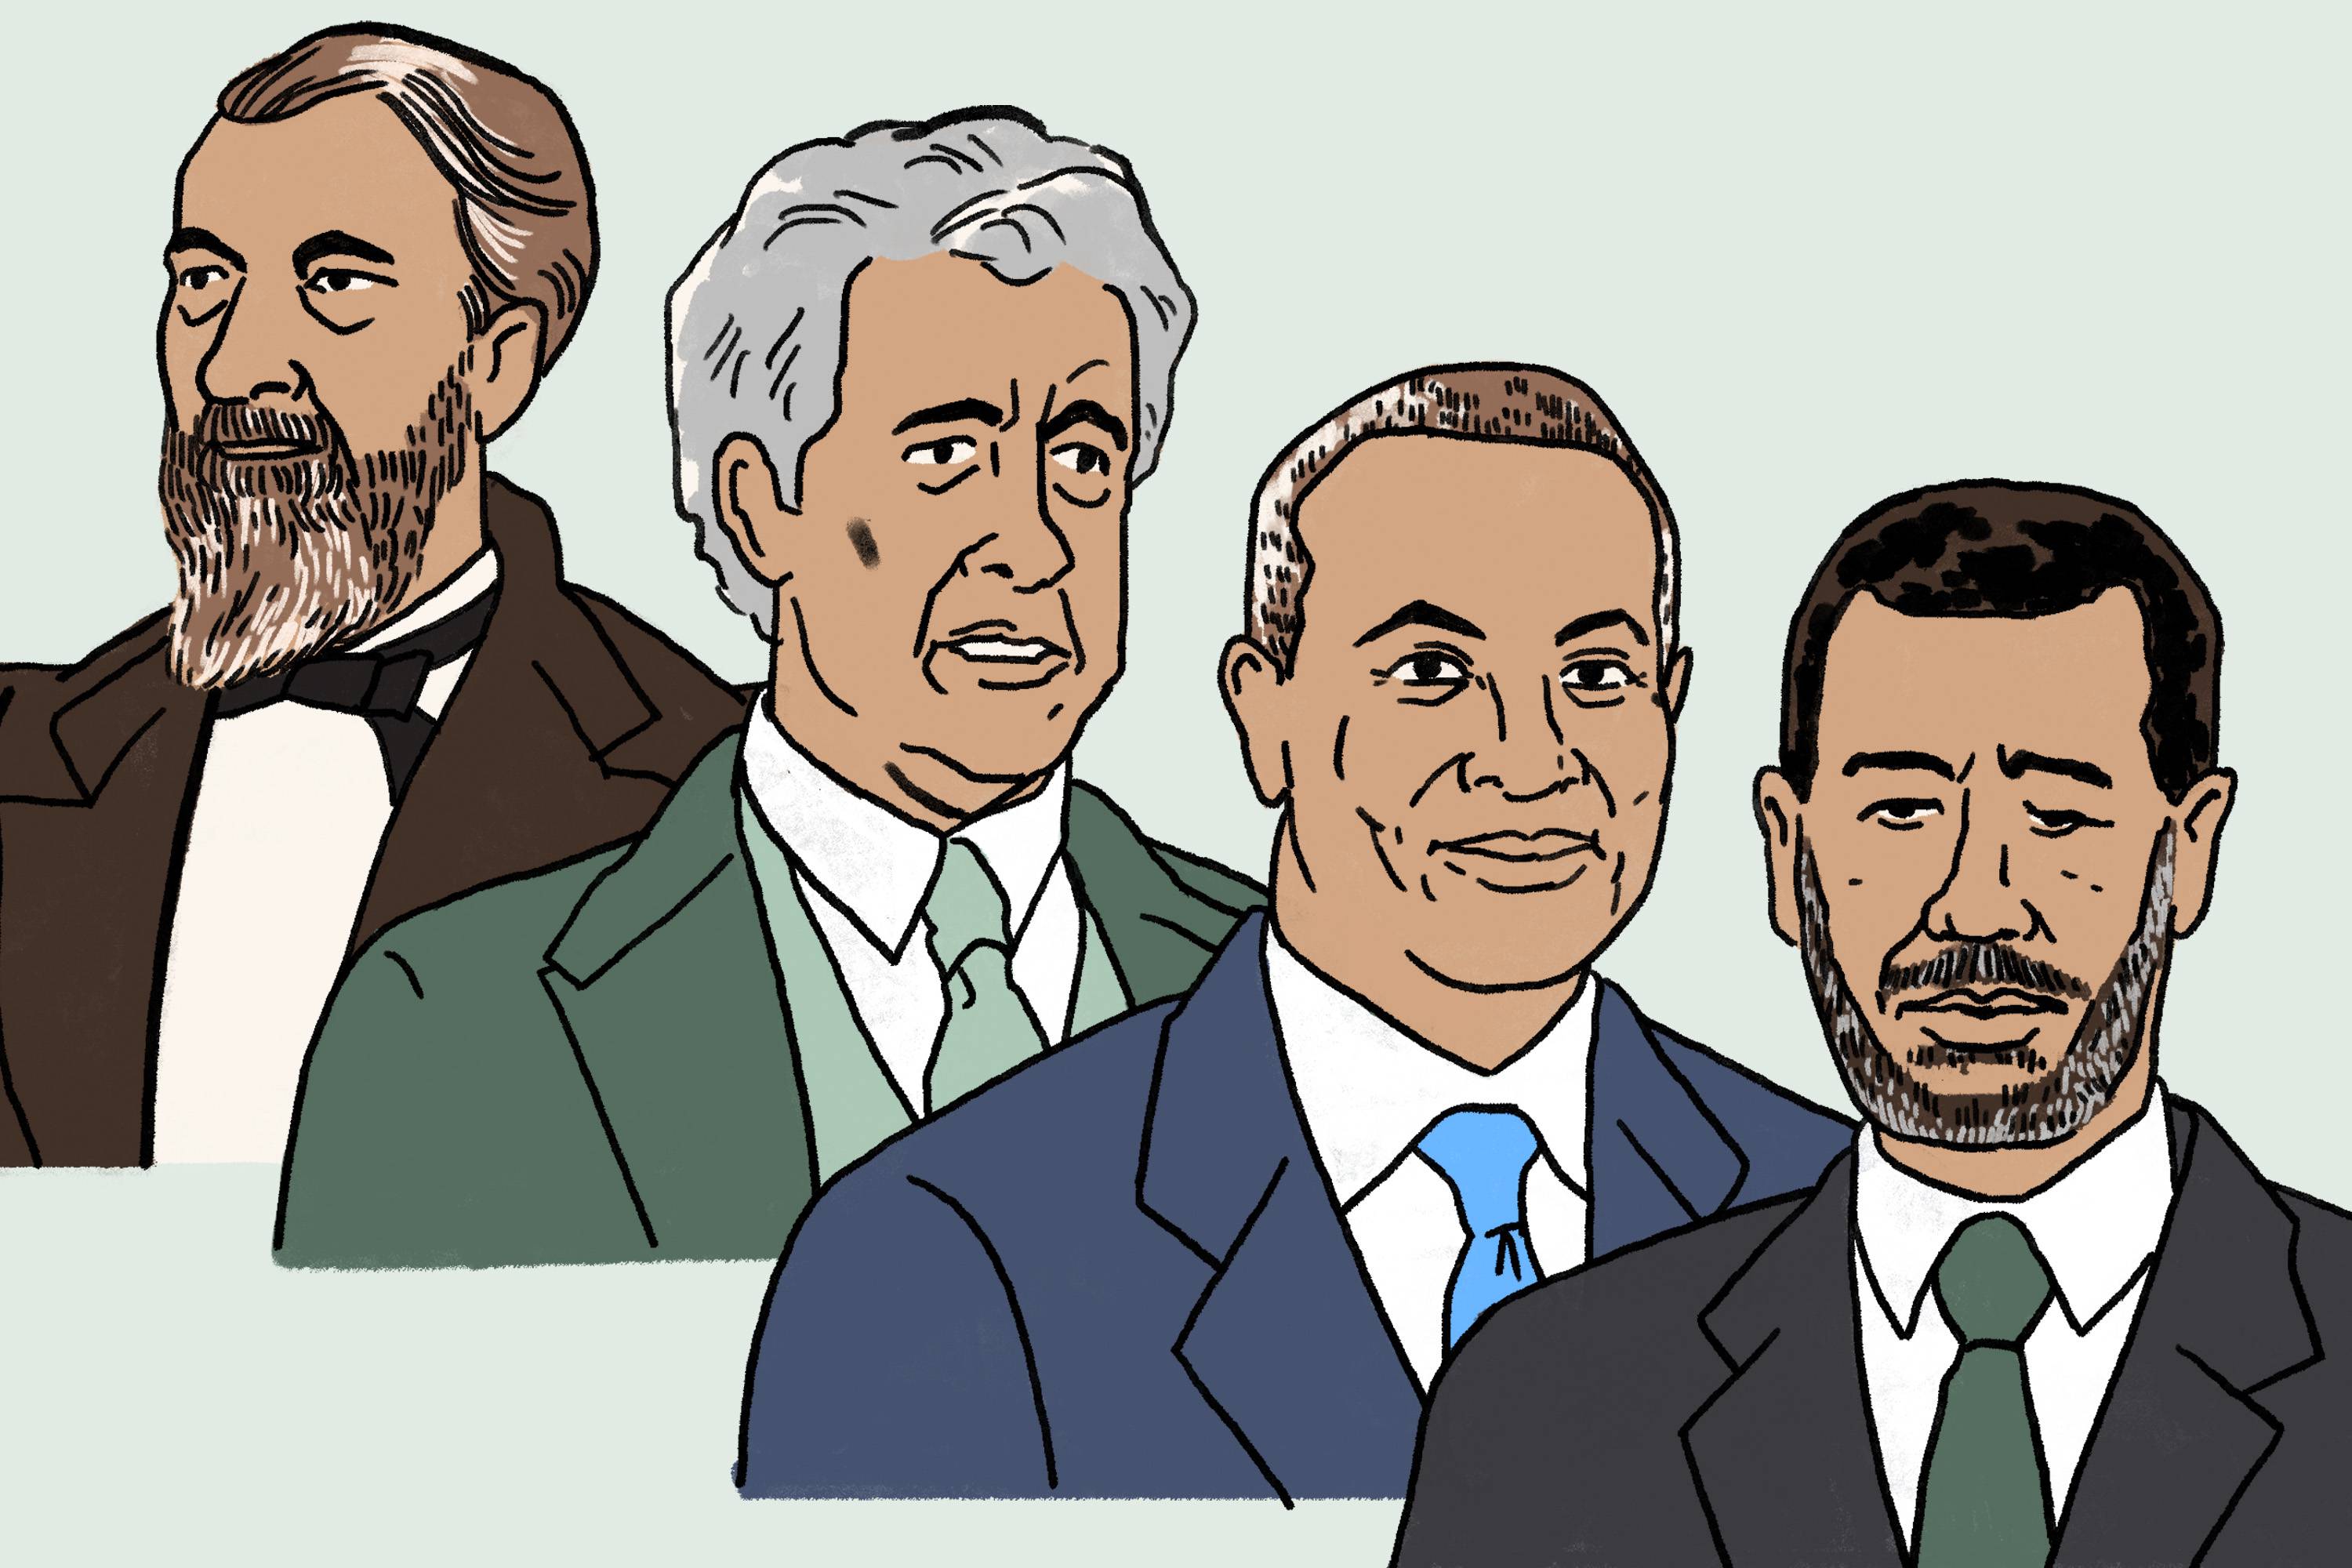 Former Black governors P.B.S. Pinchback, L. Douglas Wilder, Deval Patrick, and David A. Paterson.